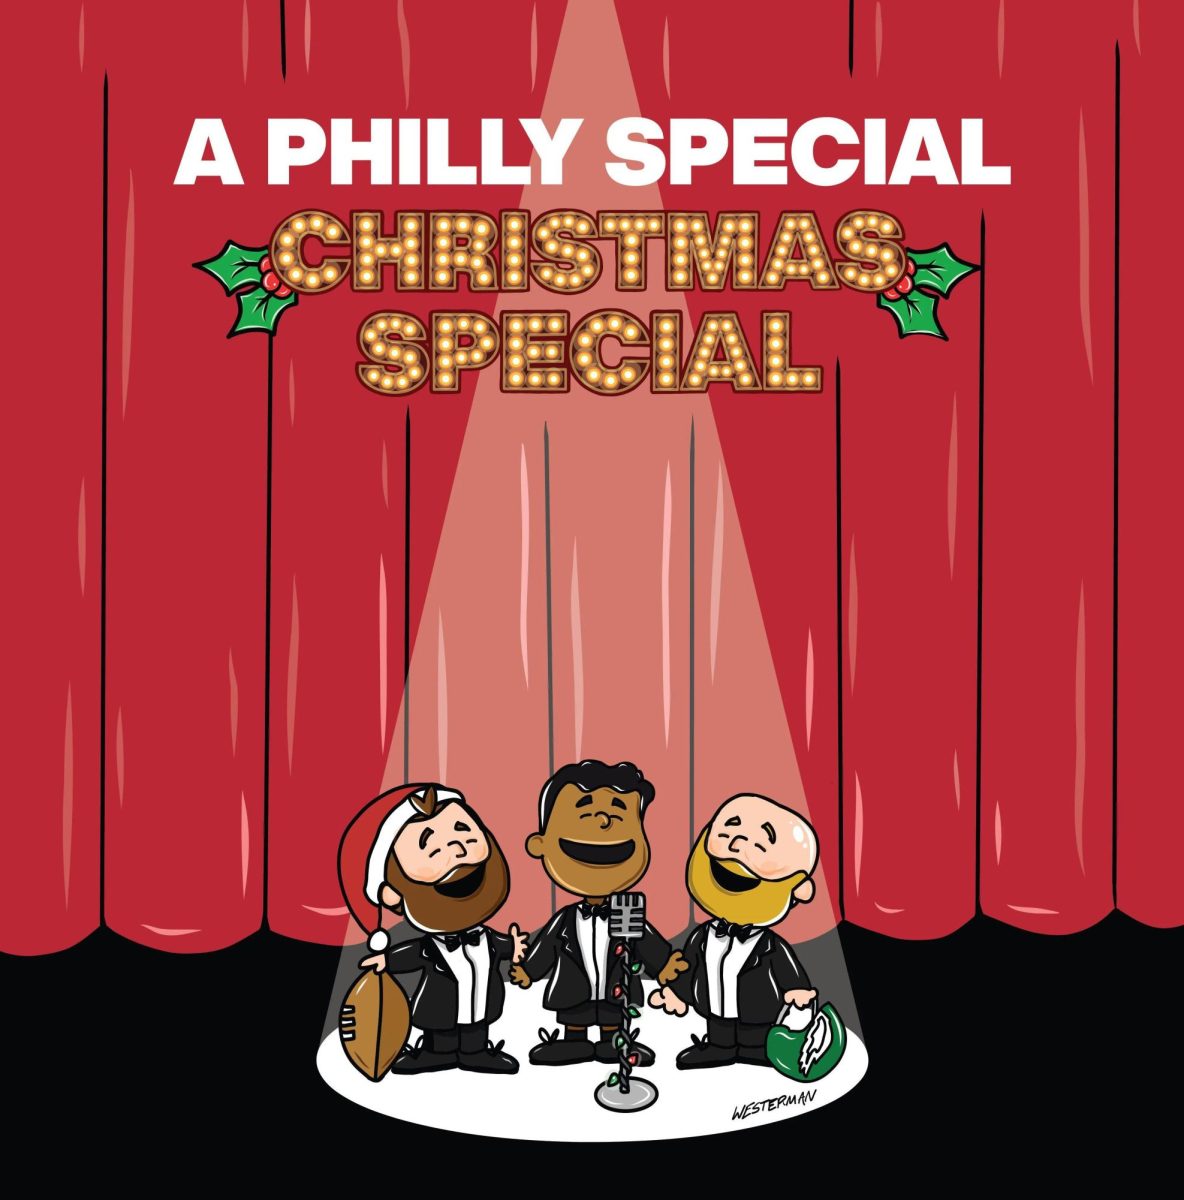 Album+cover+for+A+Philly+Special+Christmas+Special.+